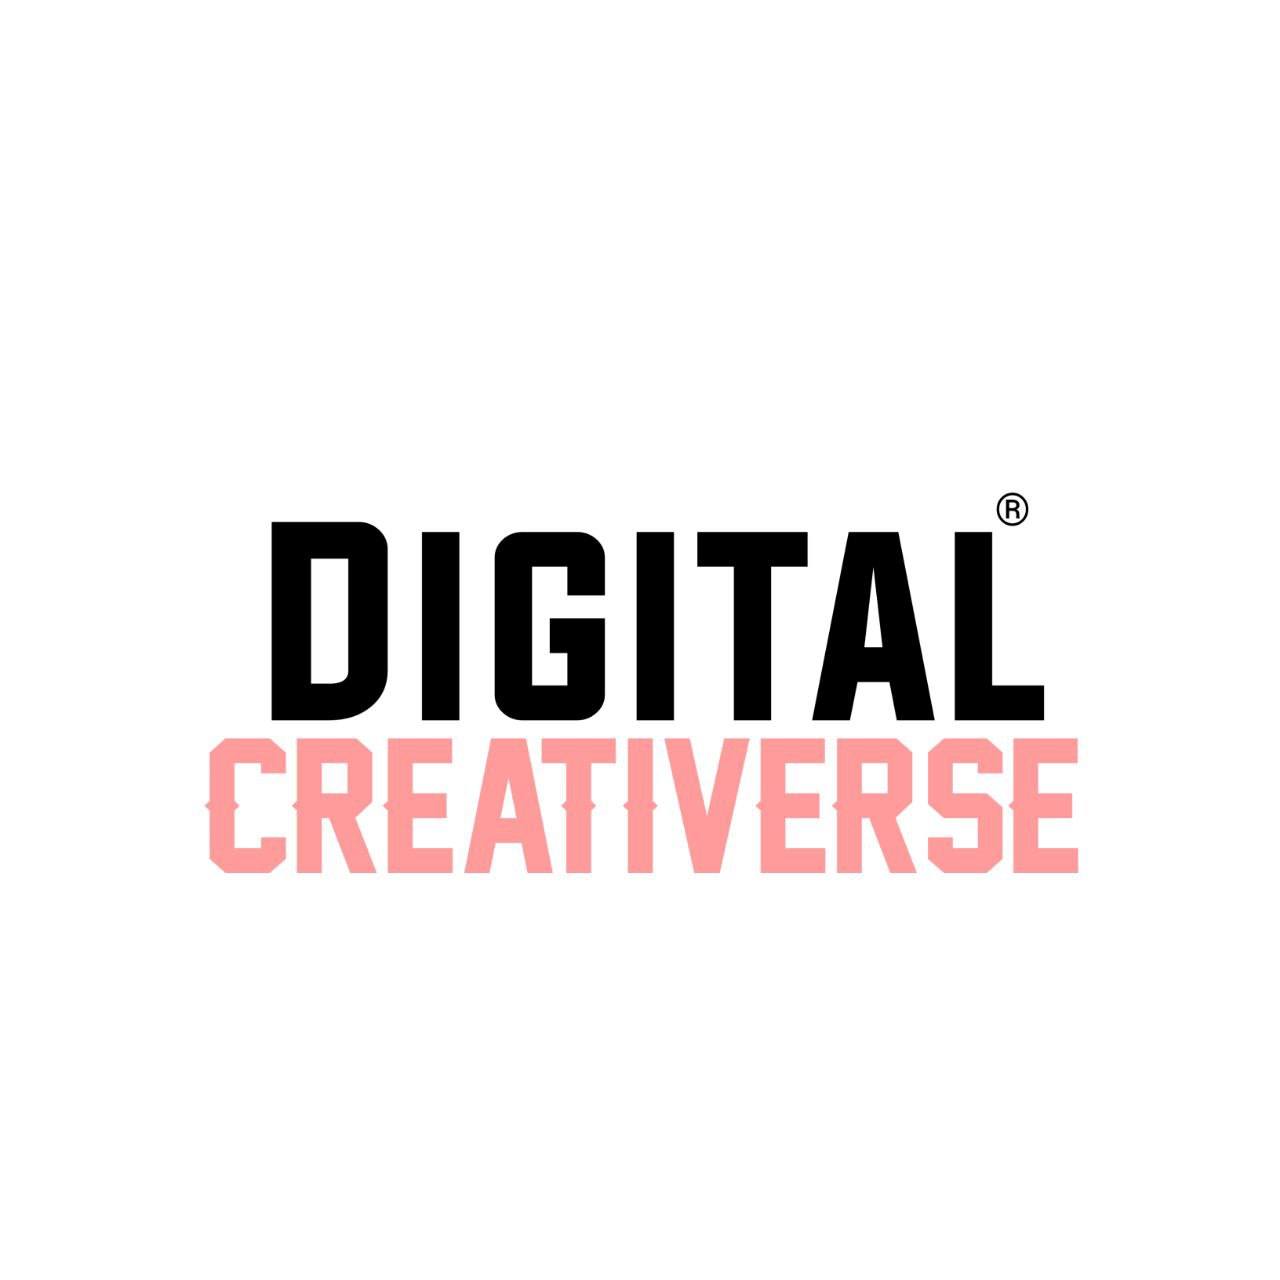 Digital Creativerse